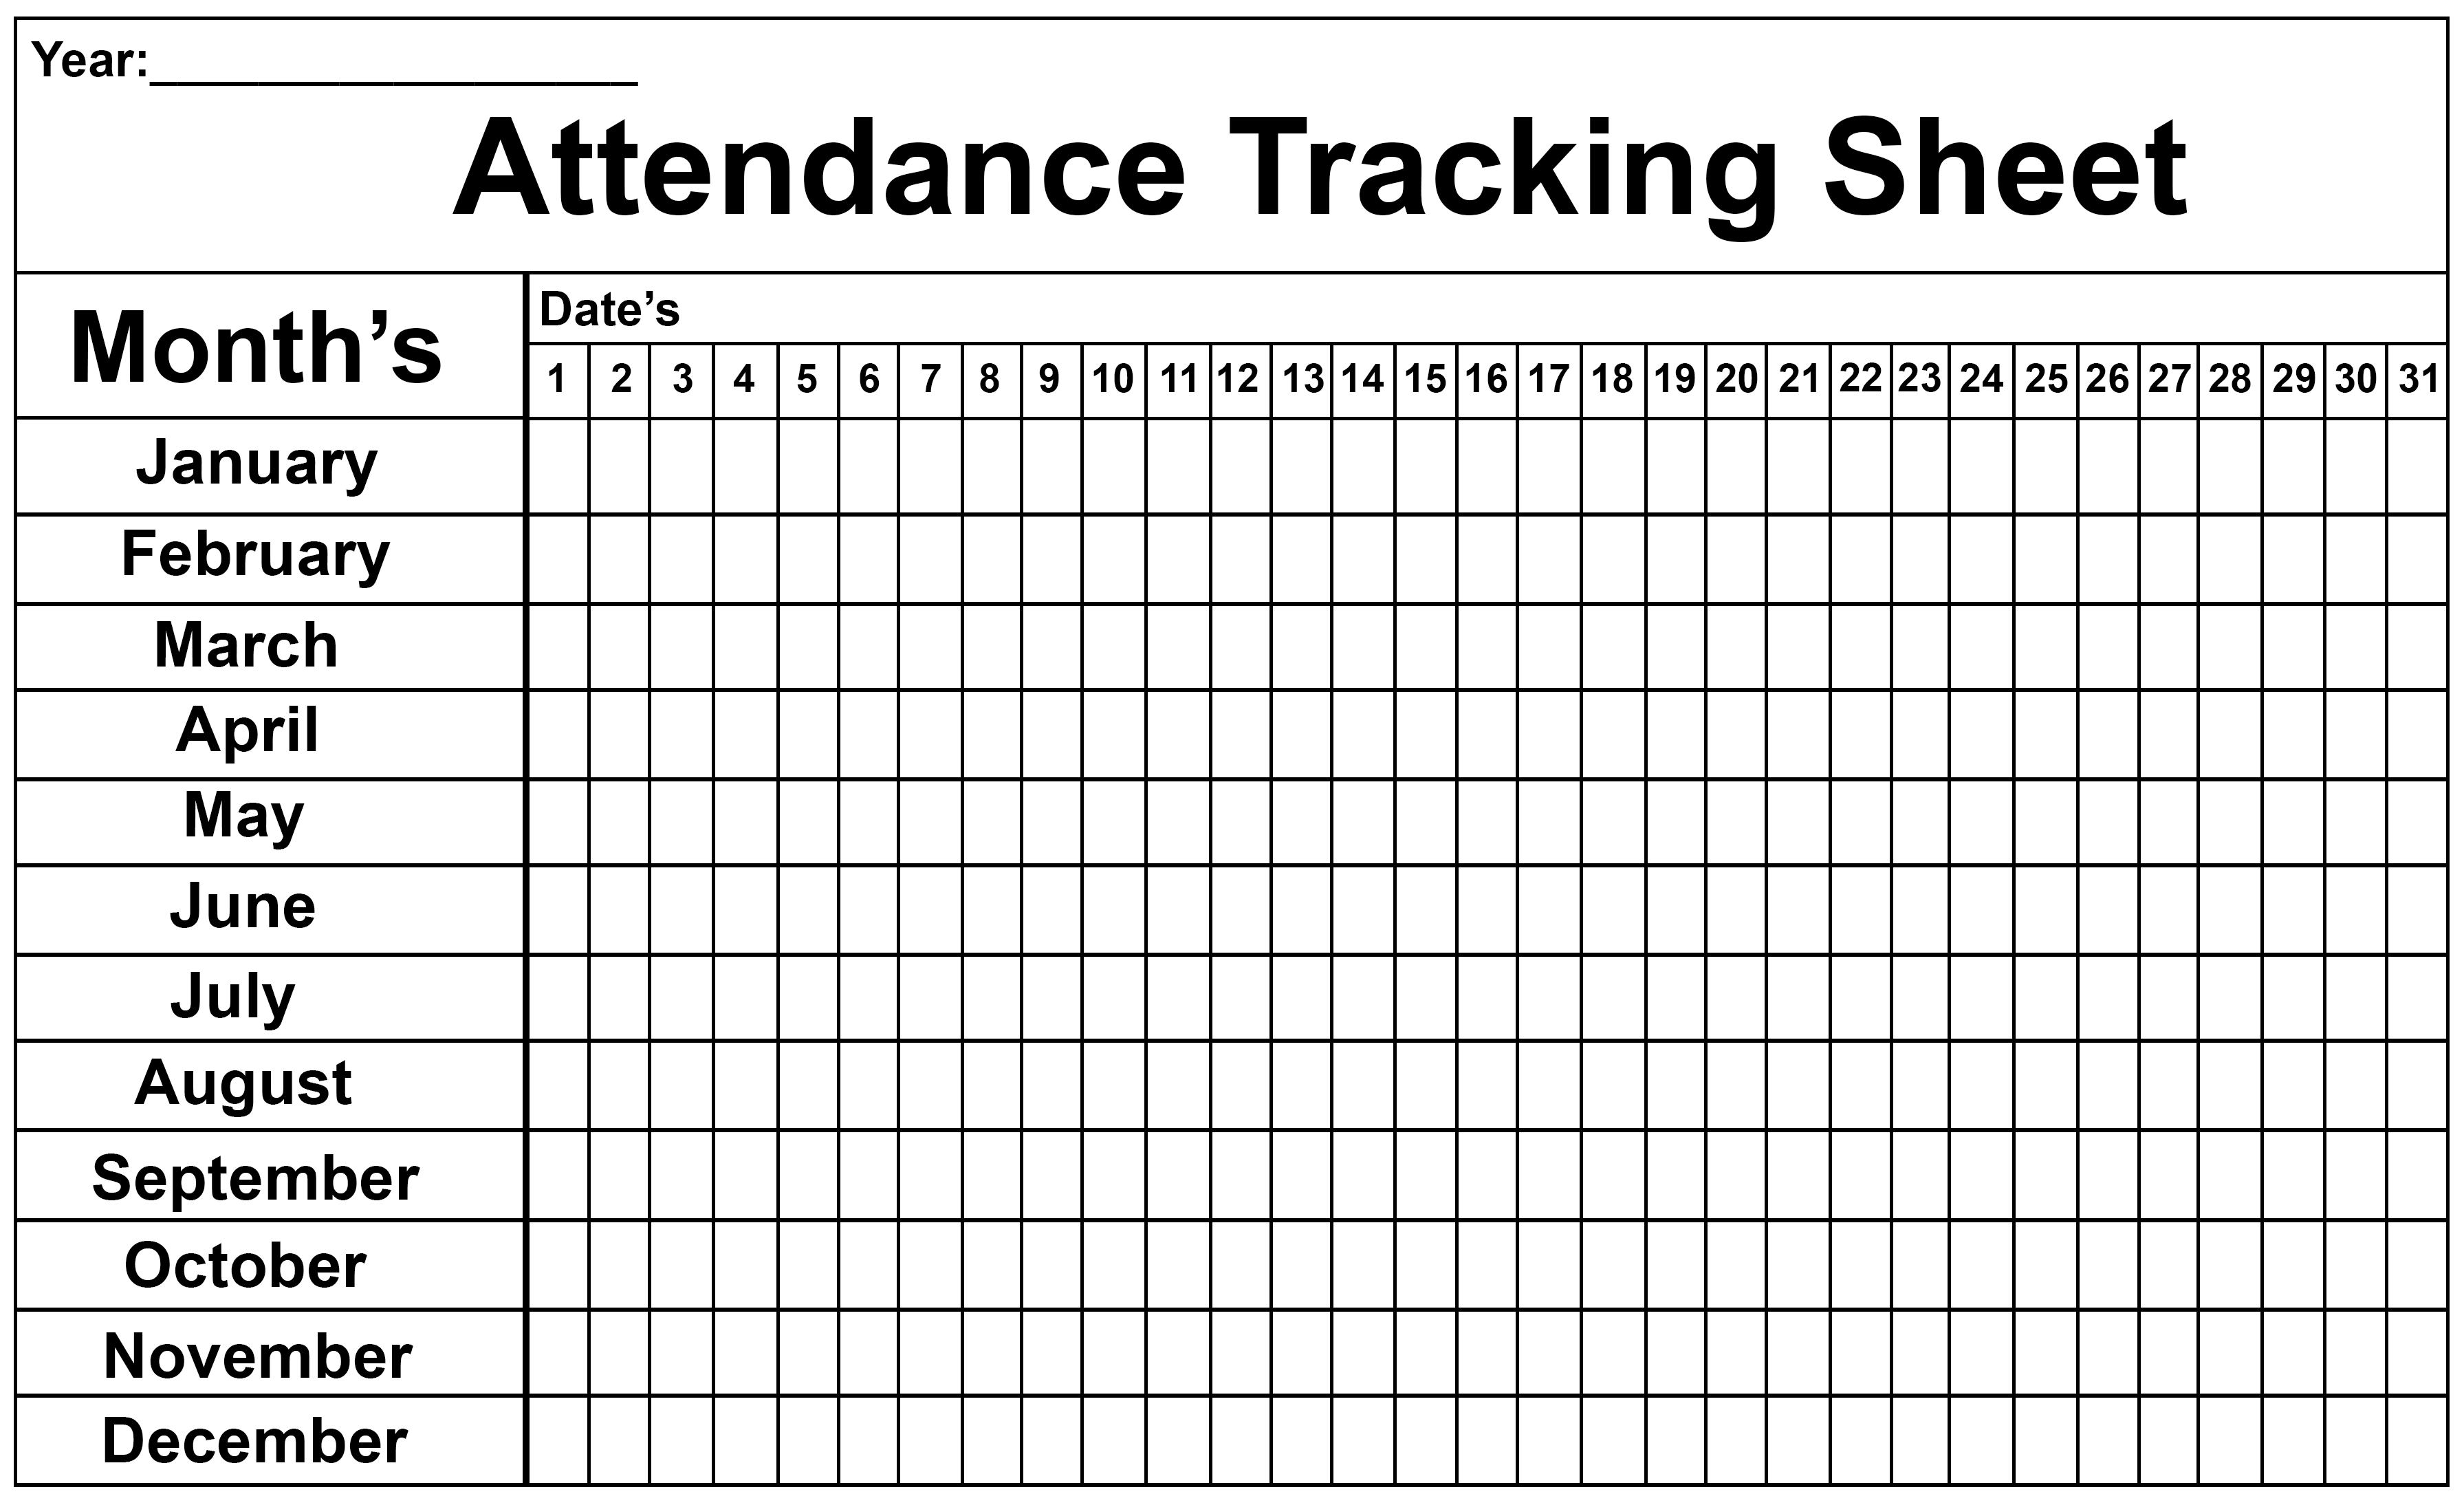 Employee Attendance Tracker Sheet 2019 | Printable Calendar Diy